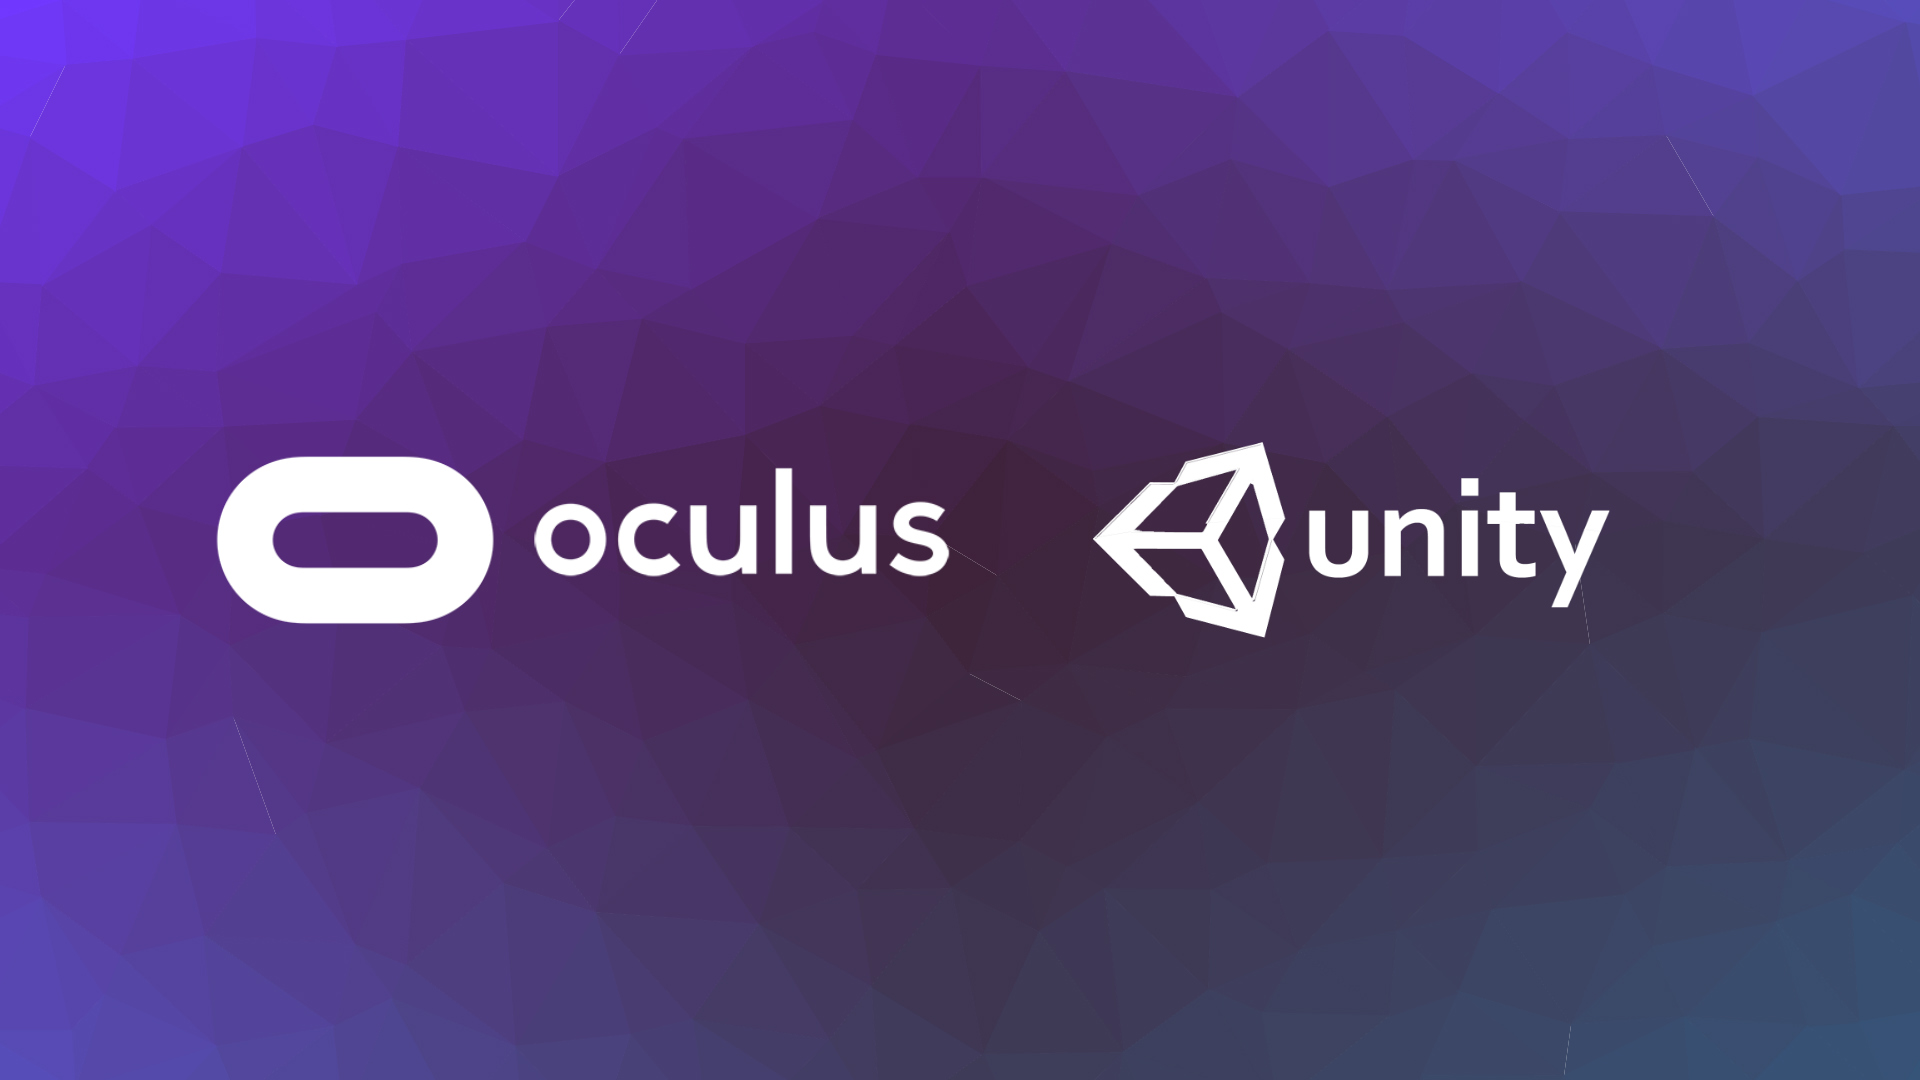 free vr apps oculus